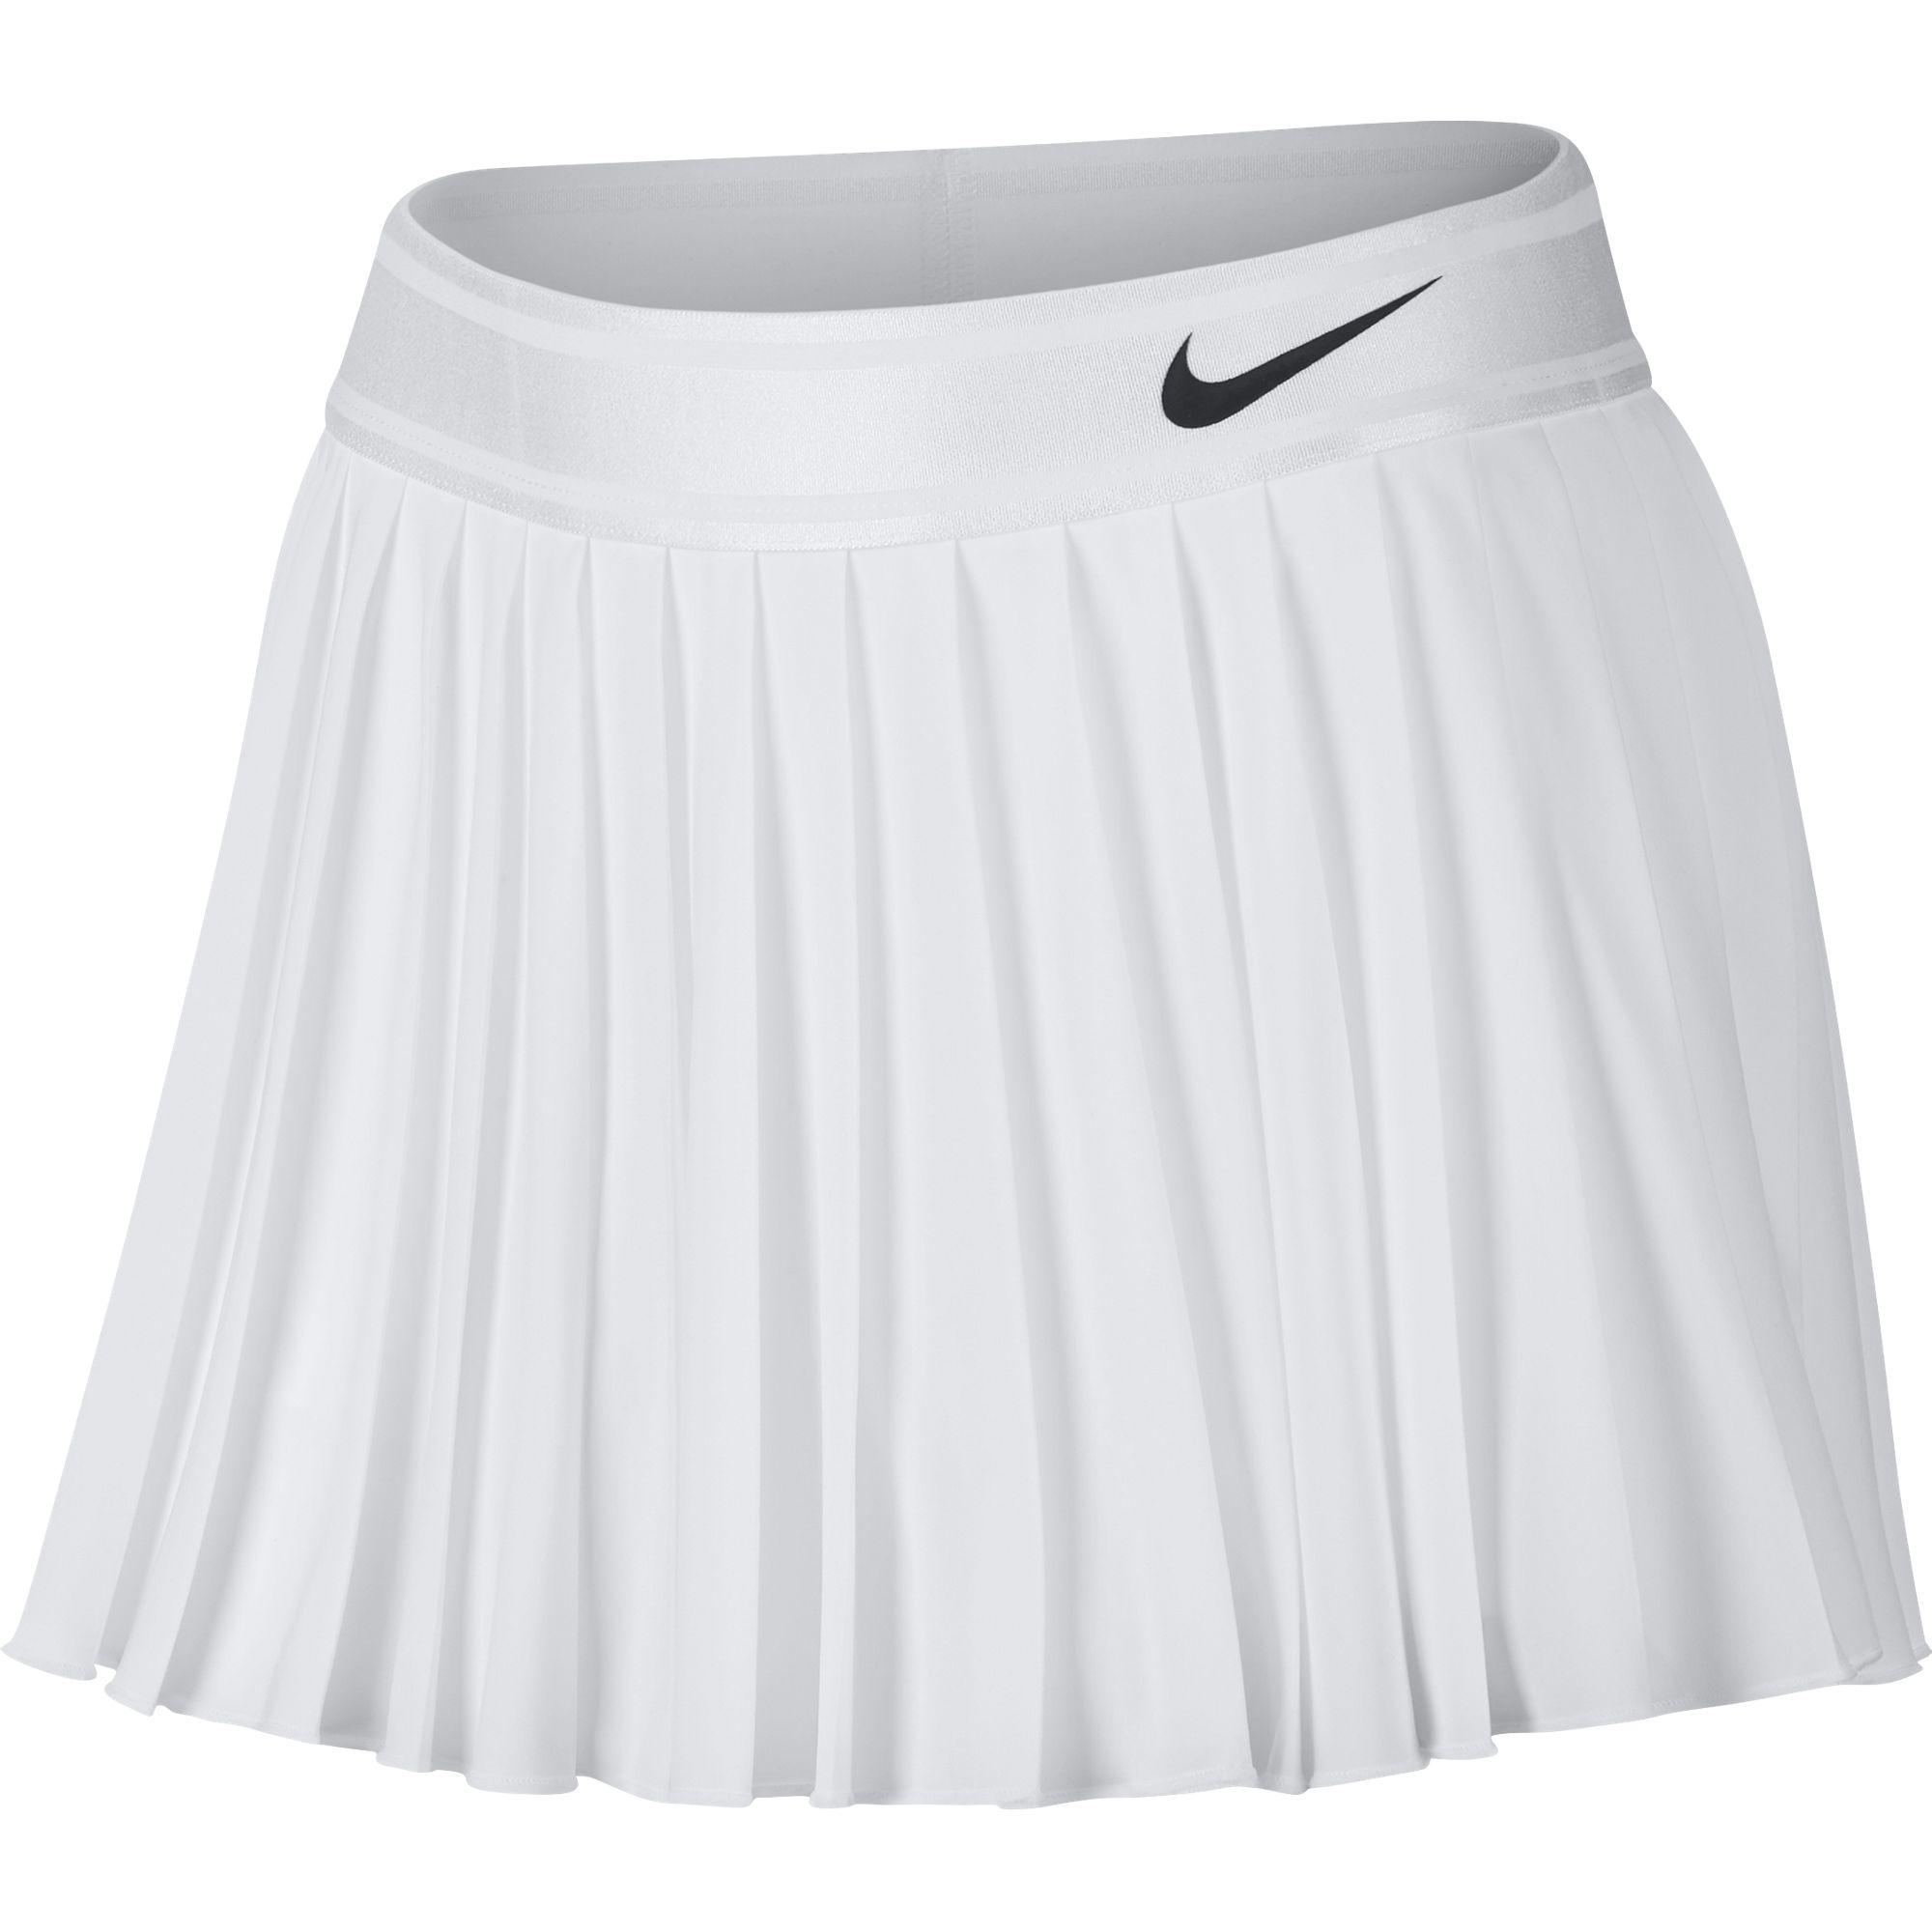 nike tennis skirt size chart